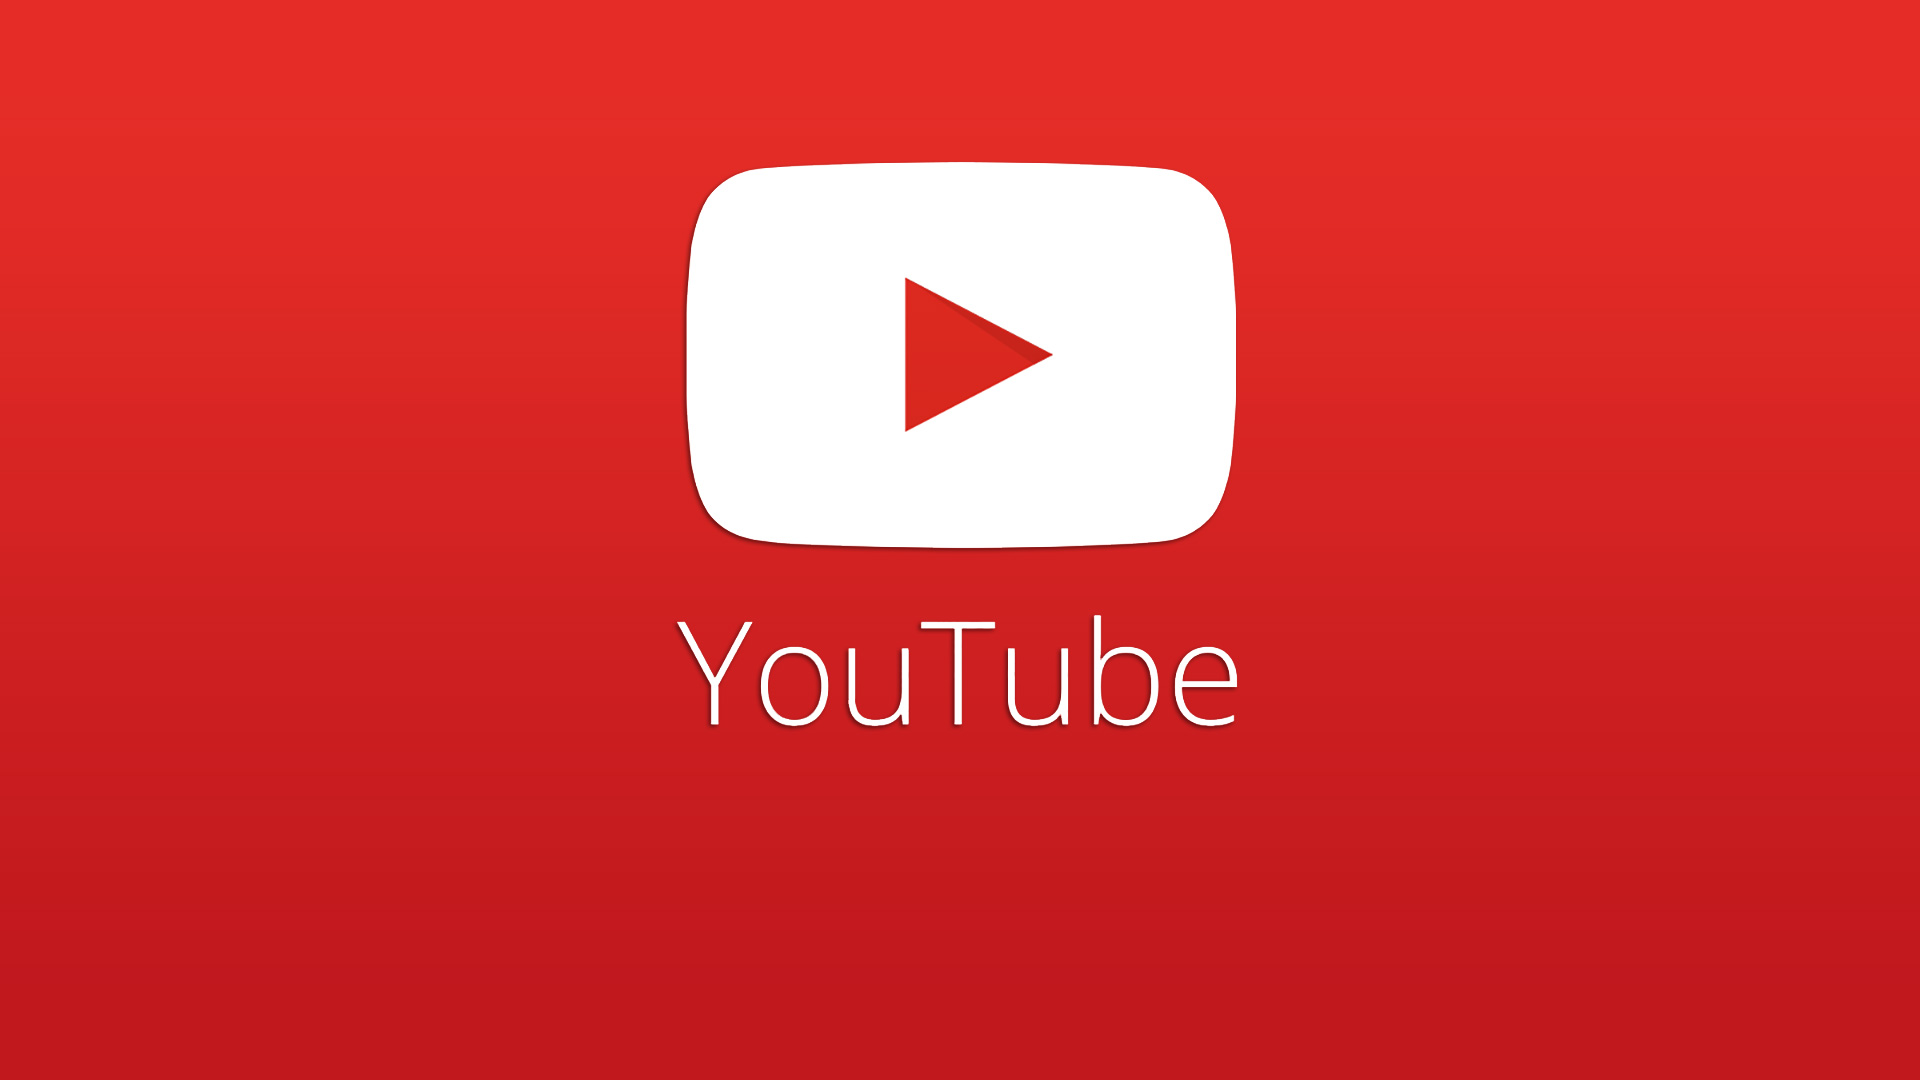 youtube-logo-name-1920.jpg